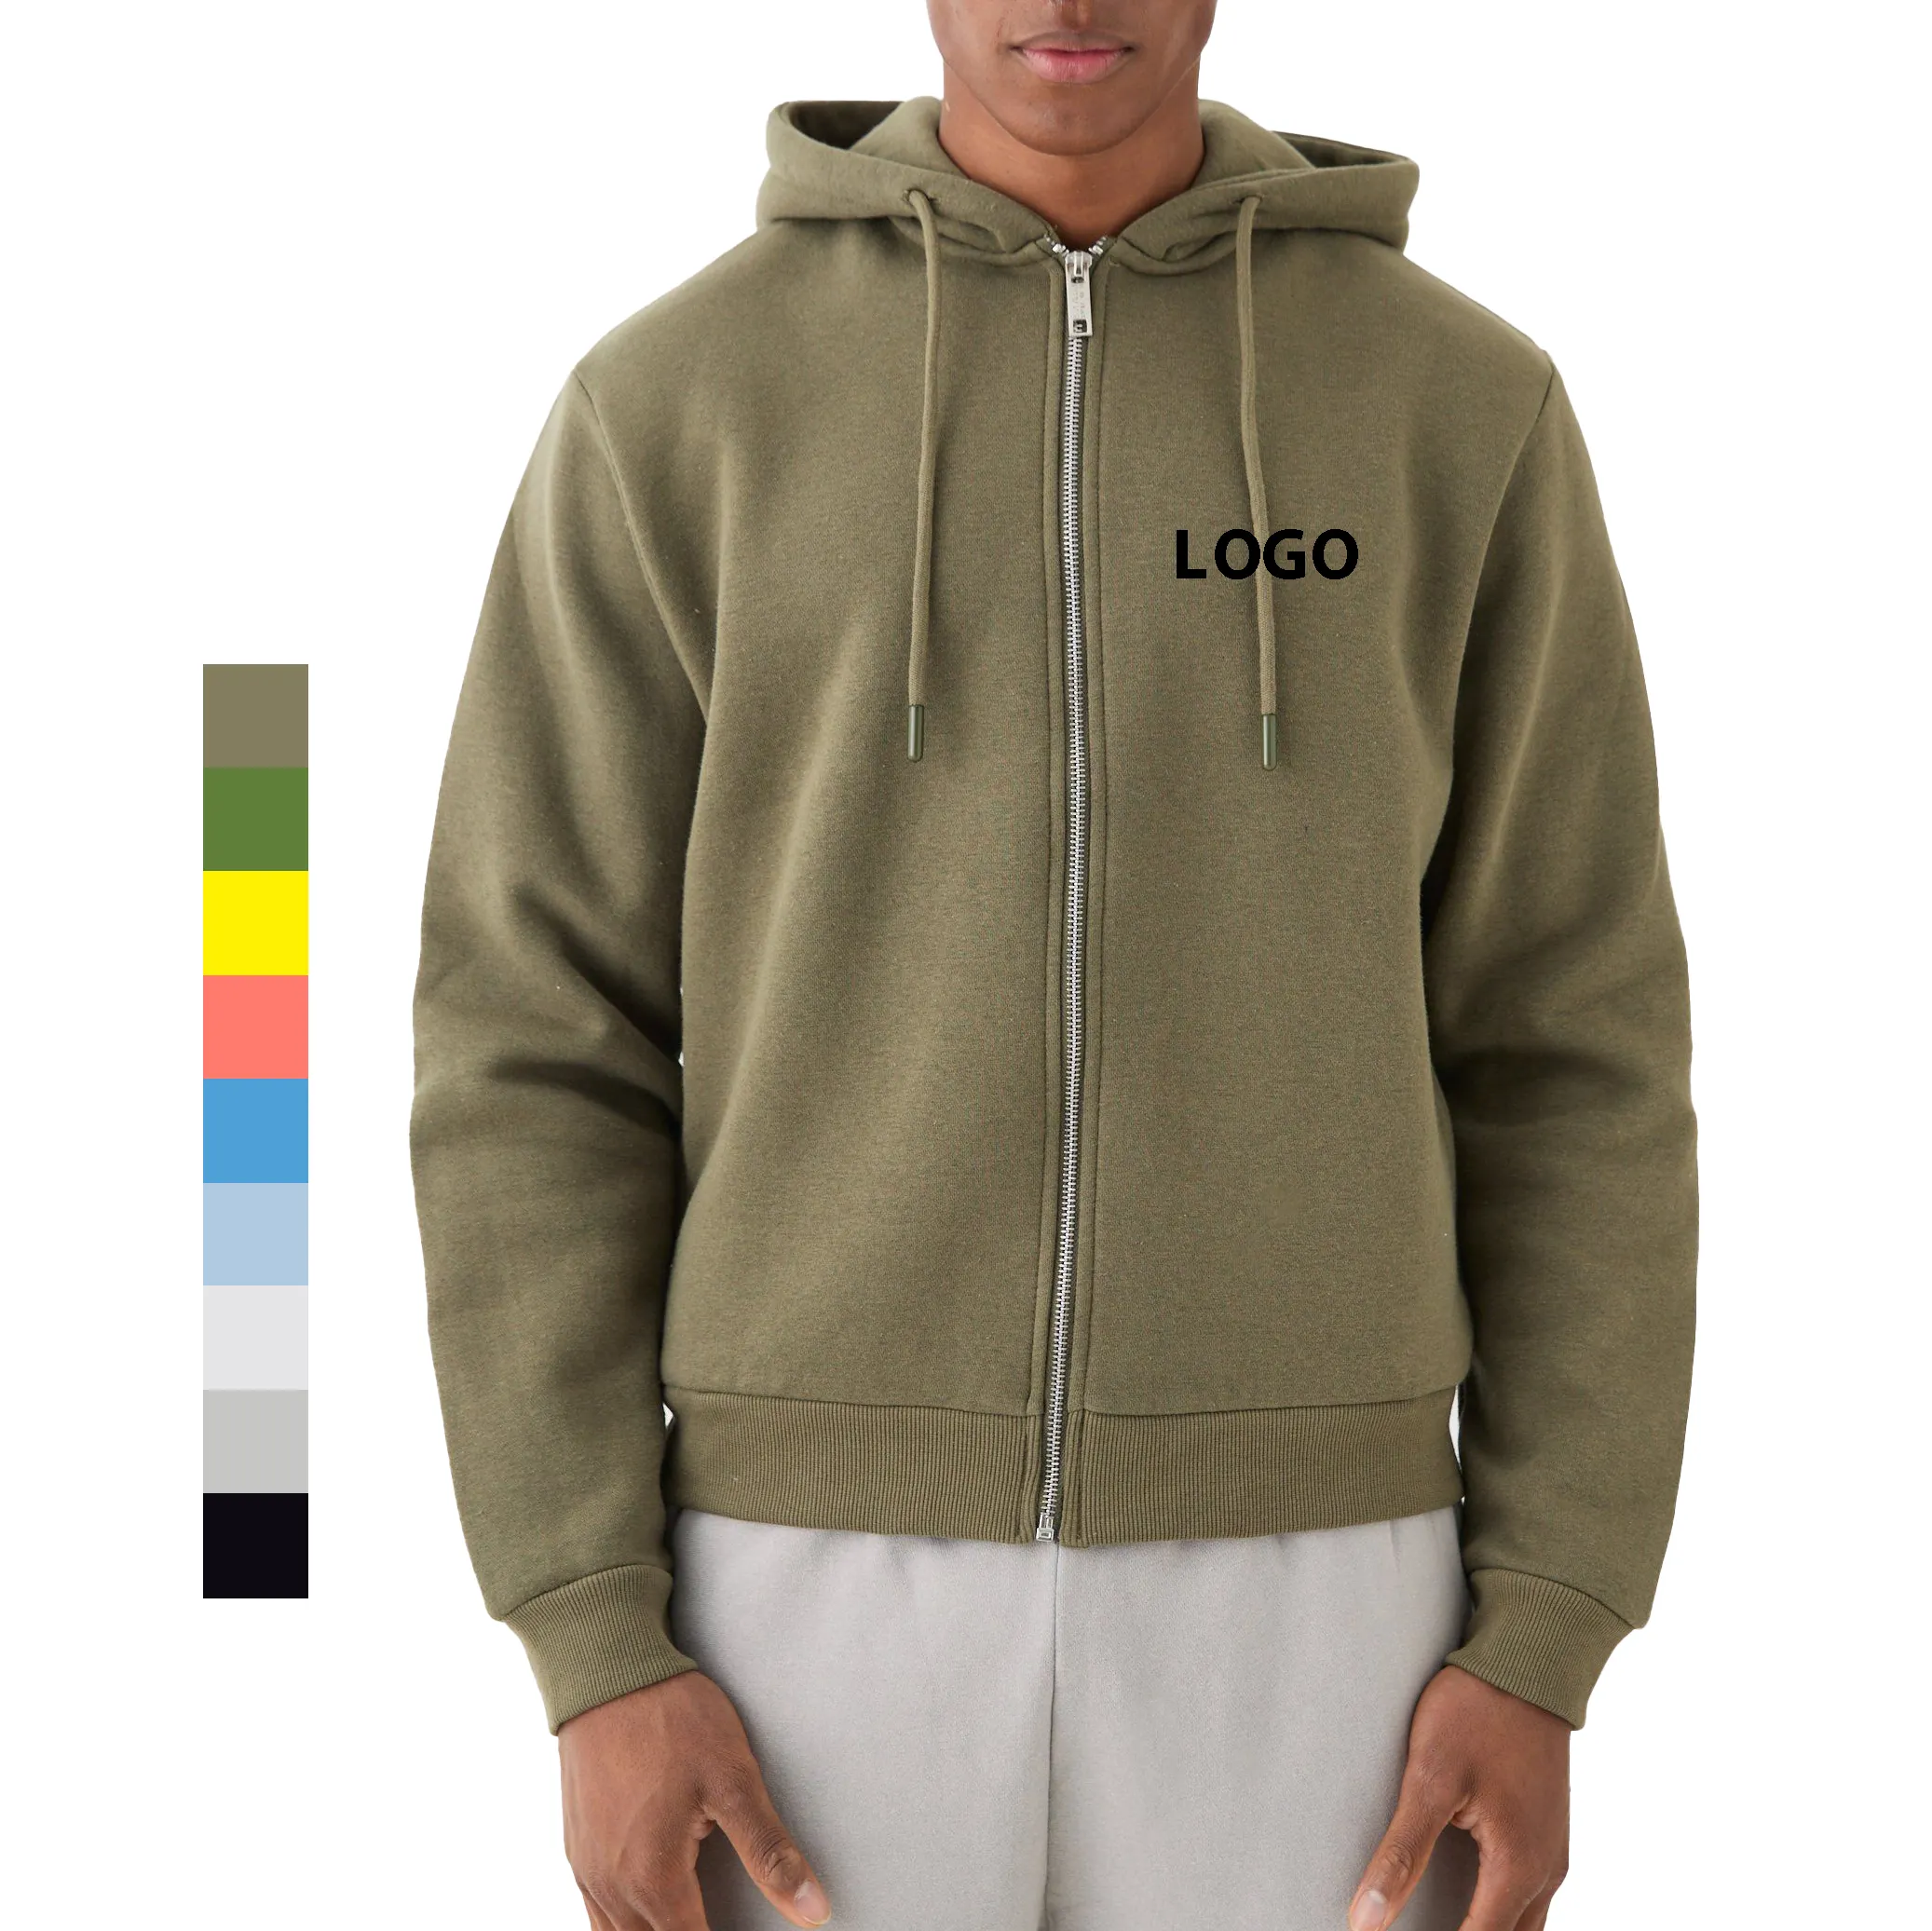 New Custom Zipper draw string Hoodies Cropped zip up hoodies 300 Gsm heavyweight pullover hoodies sweatshirts for Mens